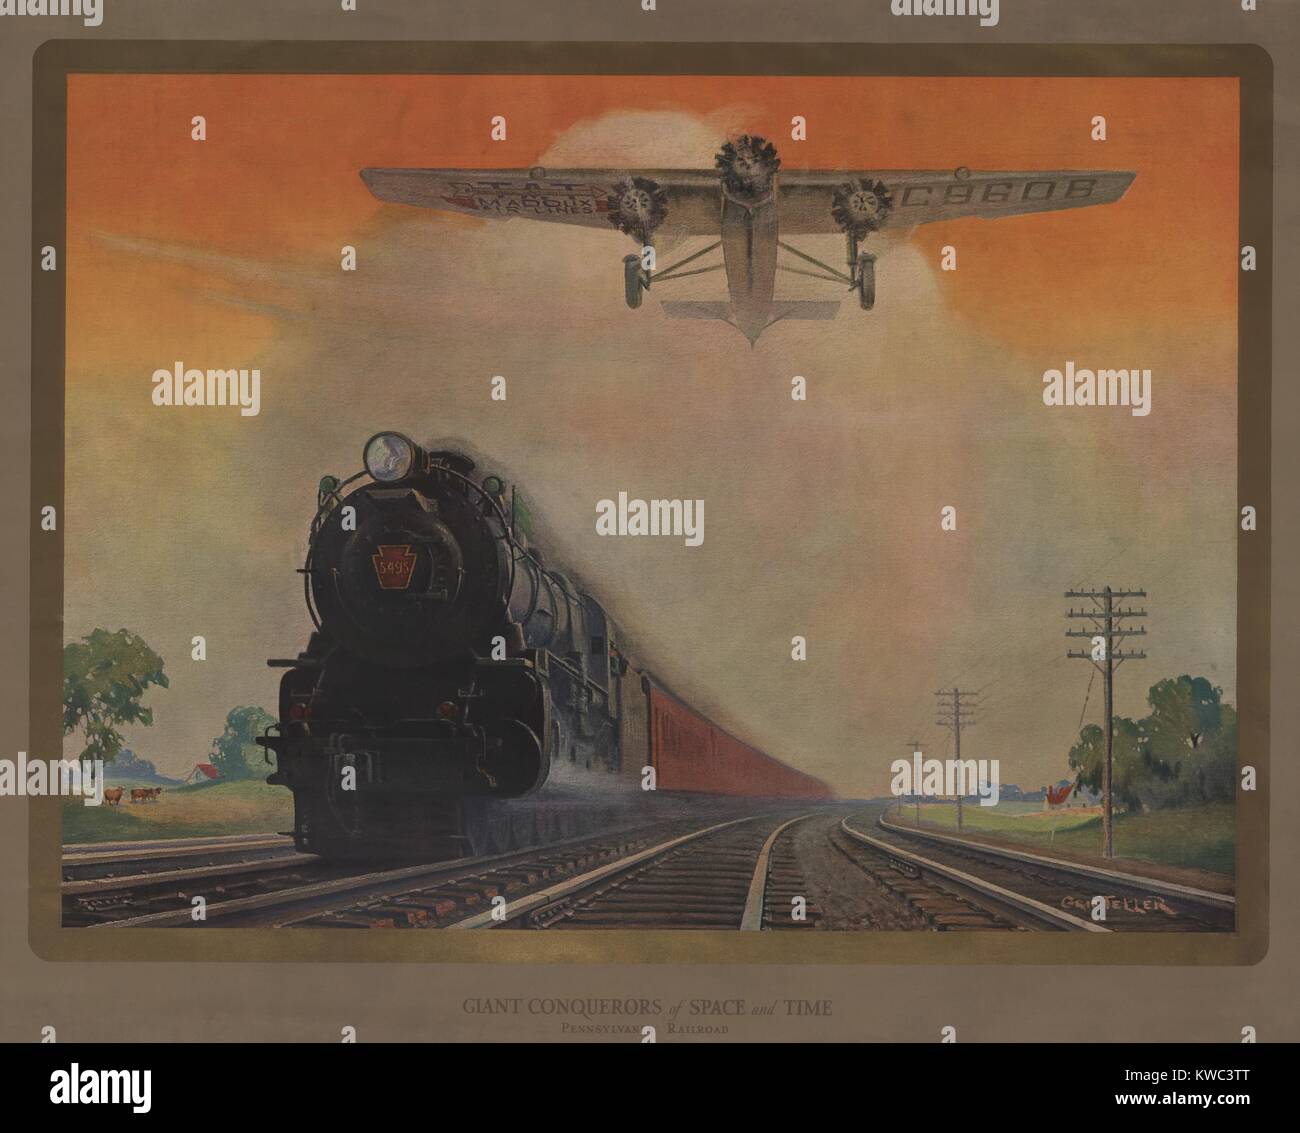 Black White Illustration Vintage Steam Locomotive Train Speeding Full Speed  Stock Vector by ©patrimonio 386820008